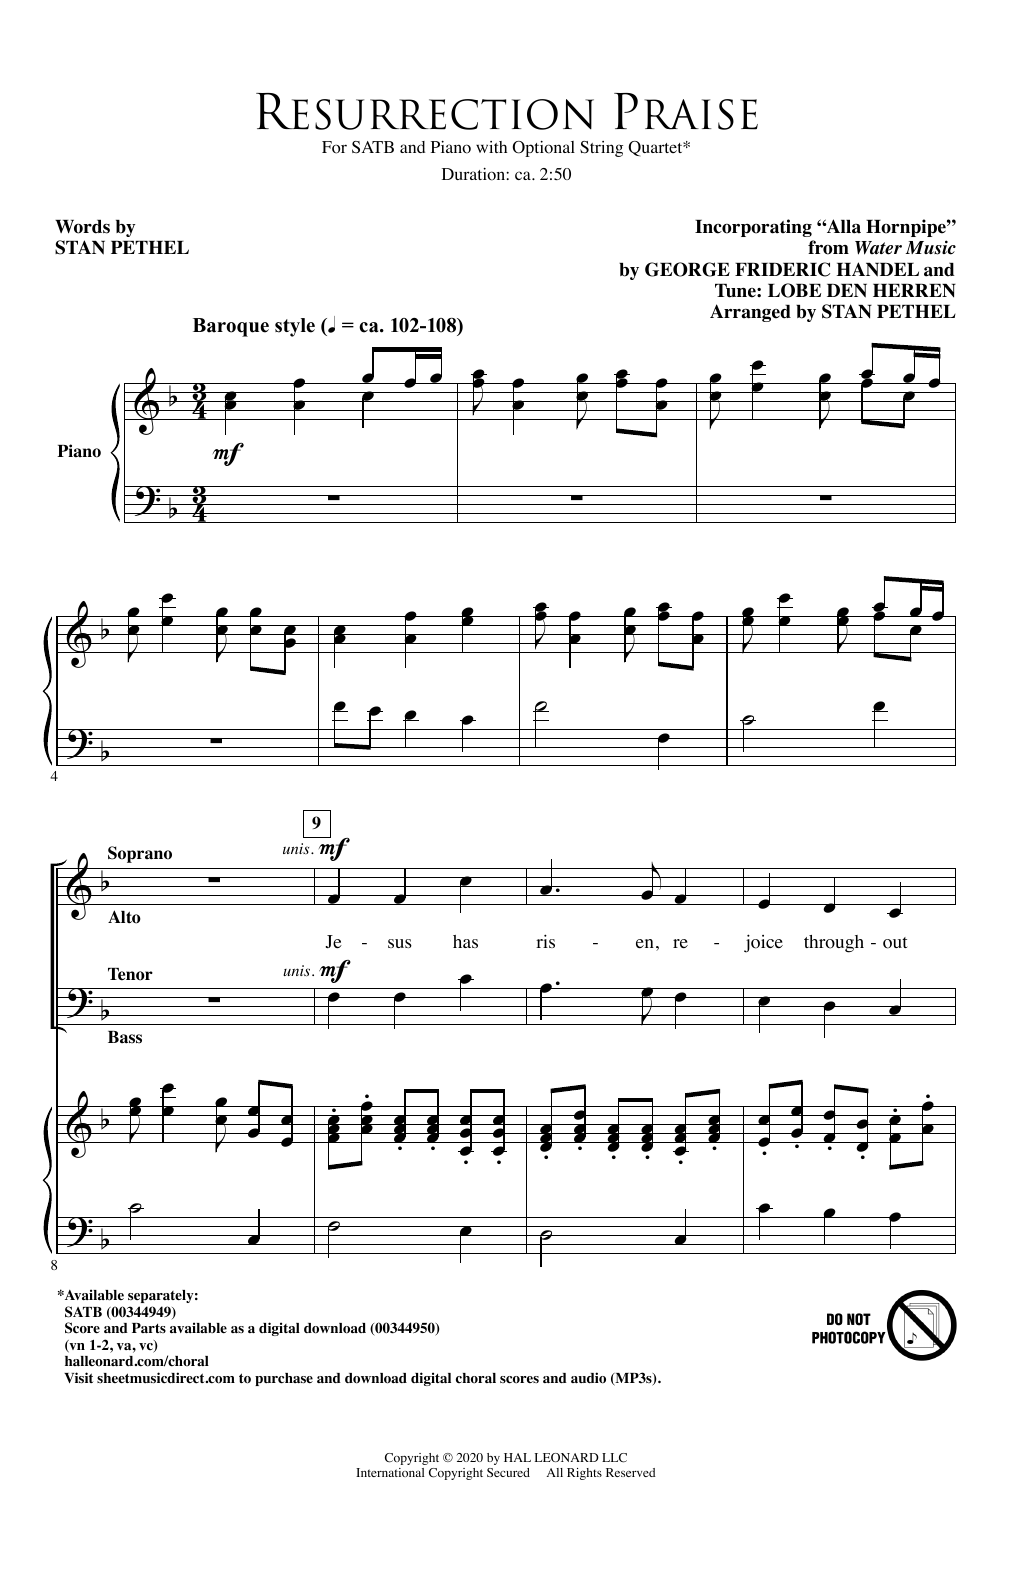 Stan Pethel Resurrection Praise Sheet Music Notes & Chords for SATB Choir - Download or Print PDF